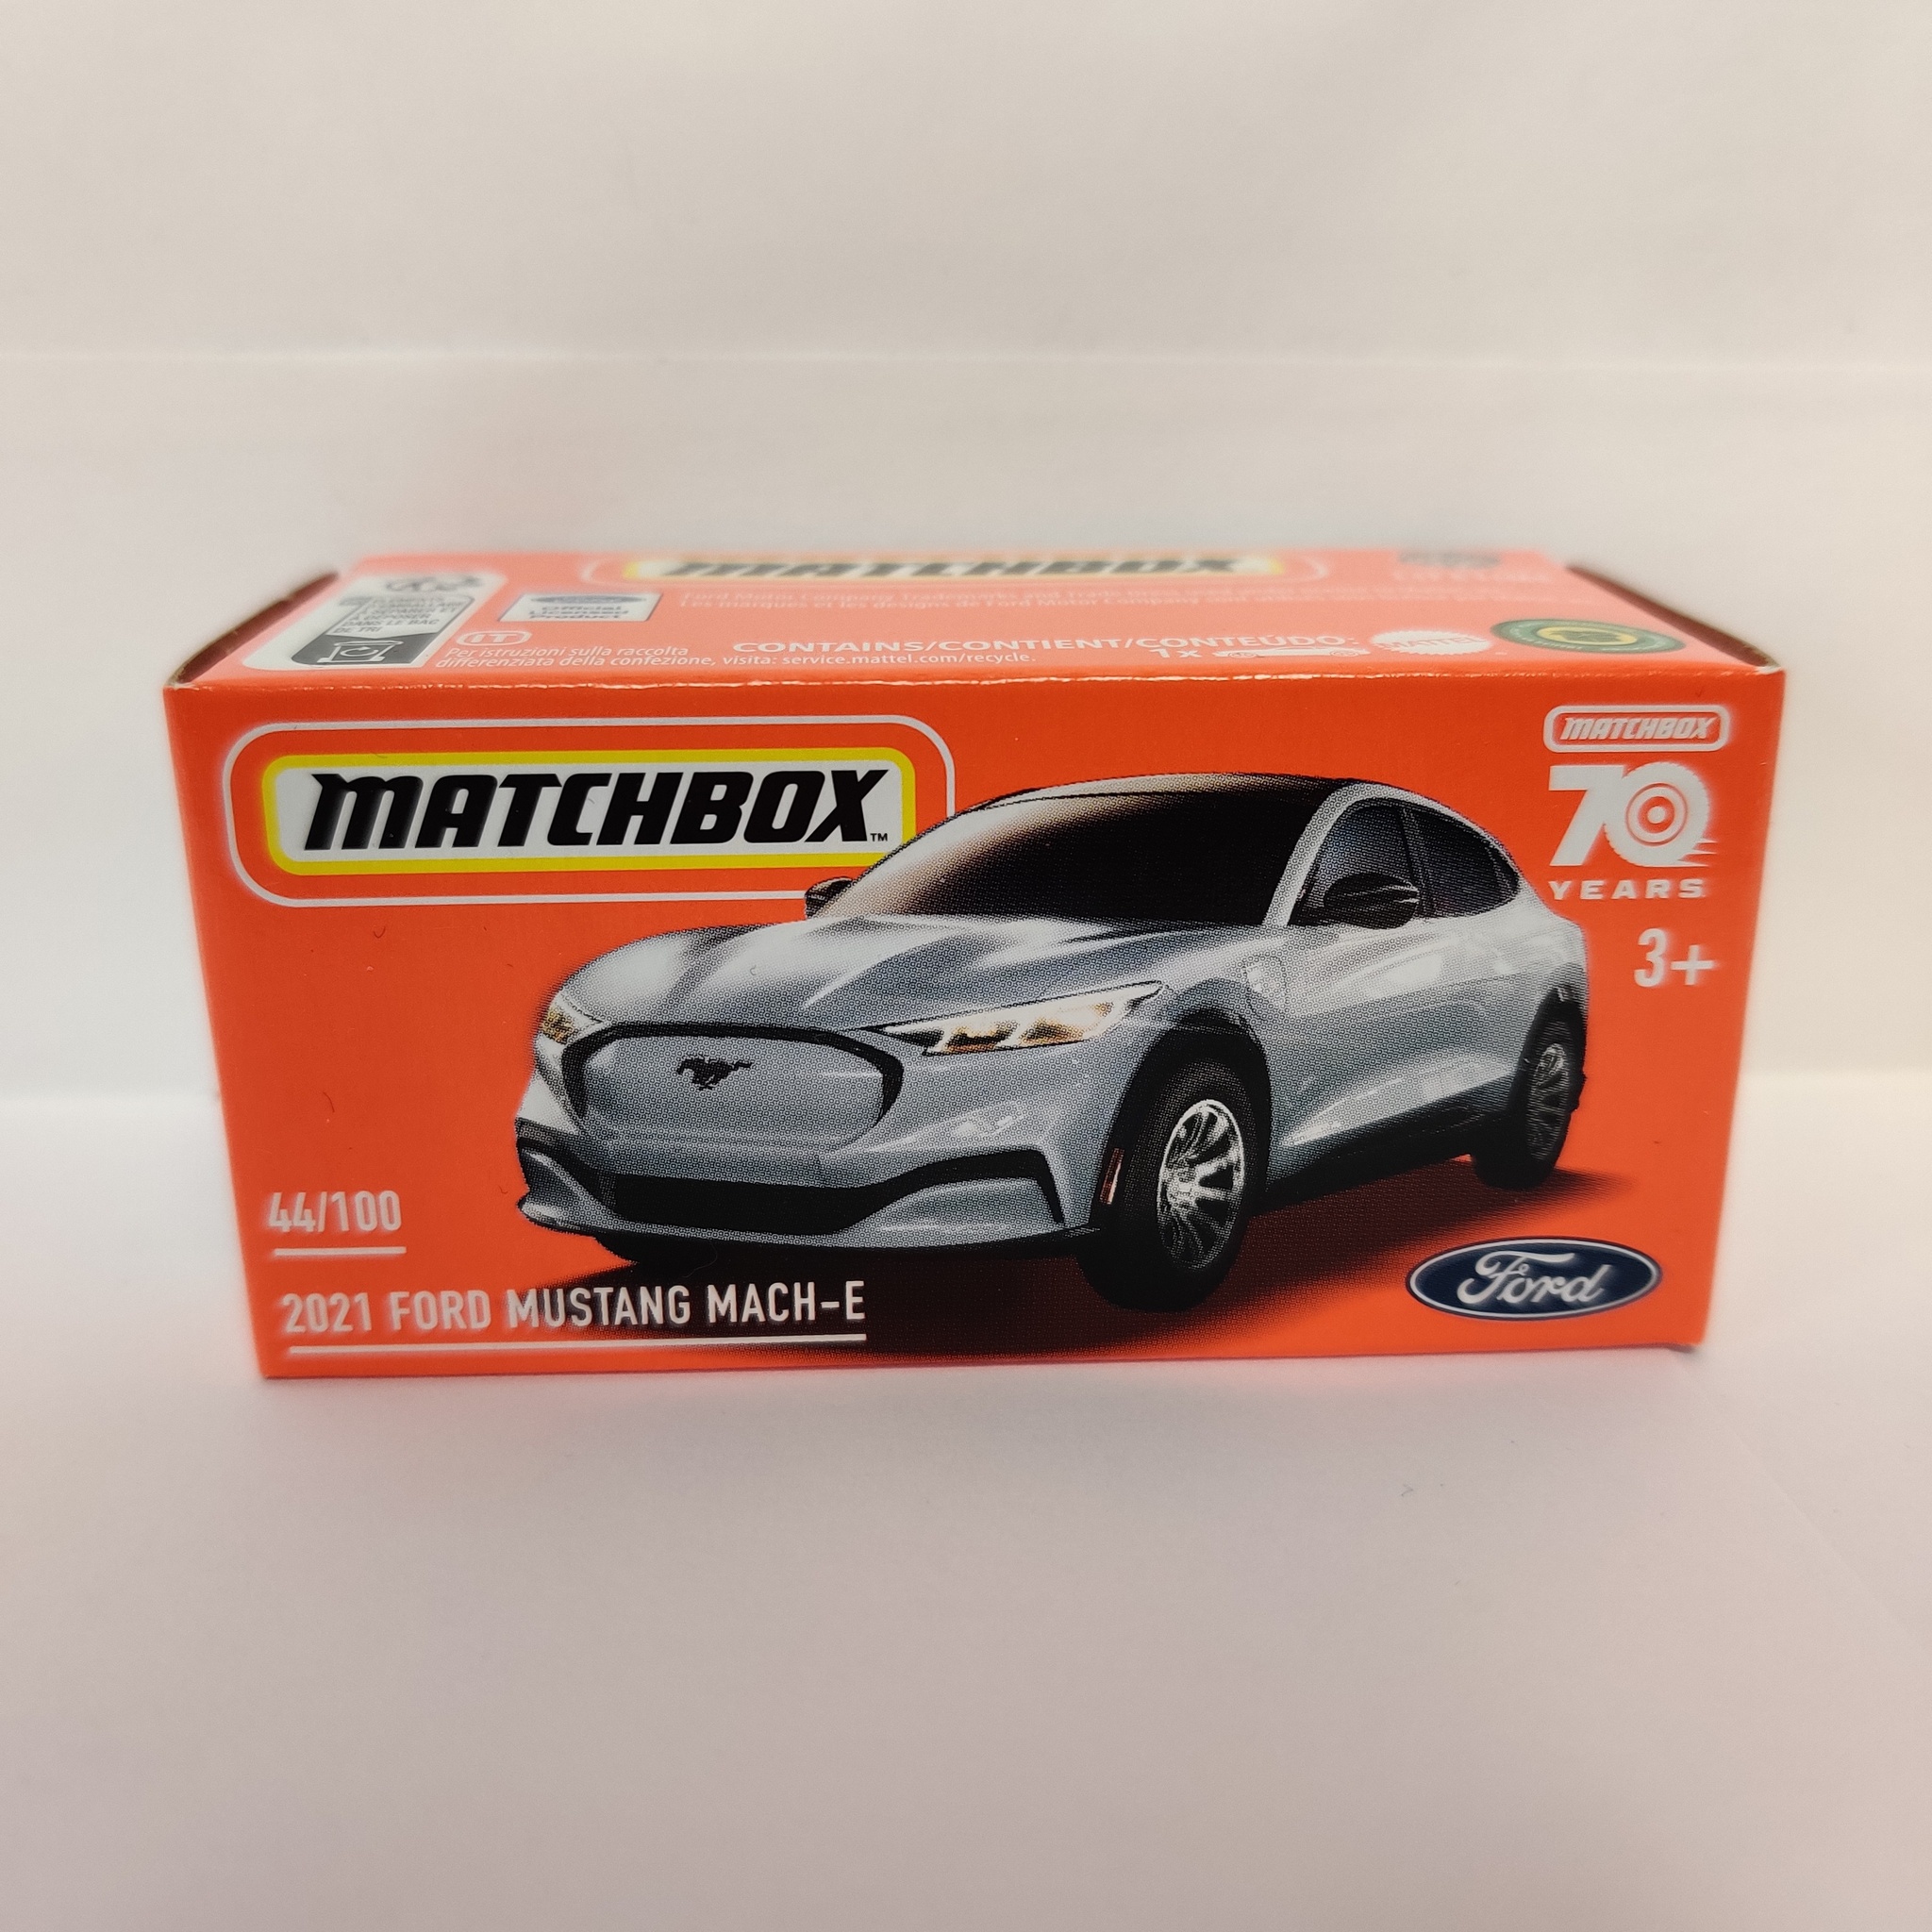 Skala 1/64 Matchbox 70 years - Ford Mustang Mach-E 2021, Grå/grey